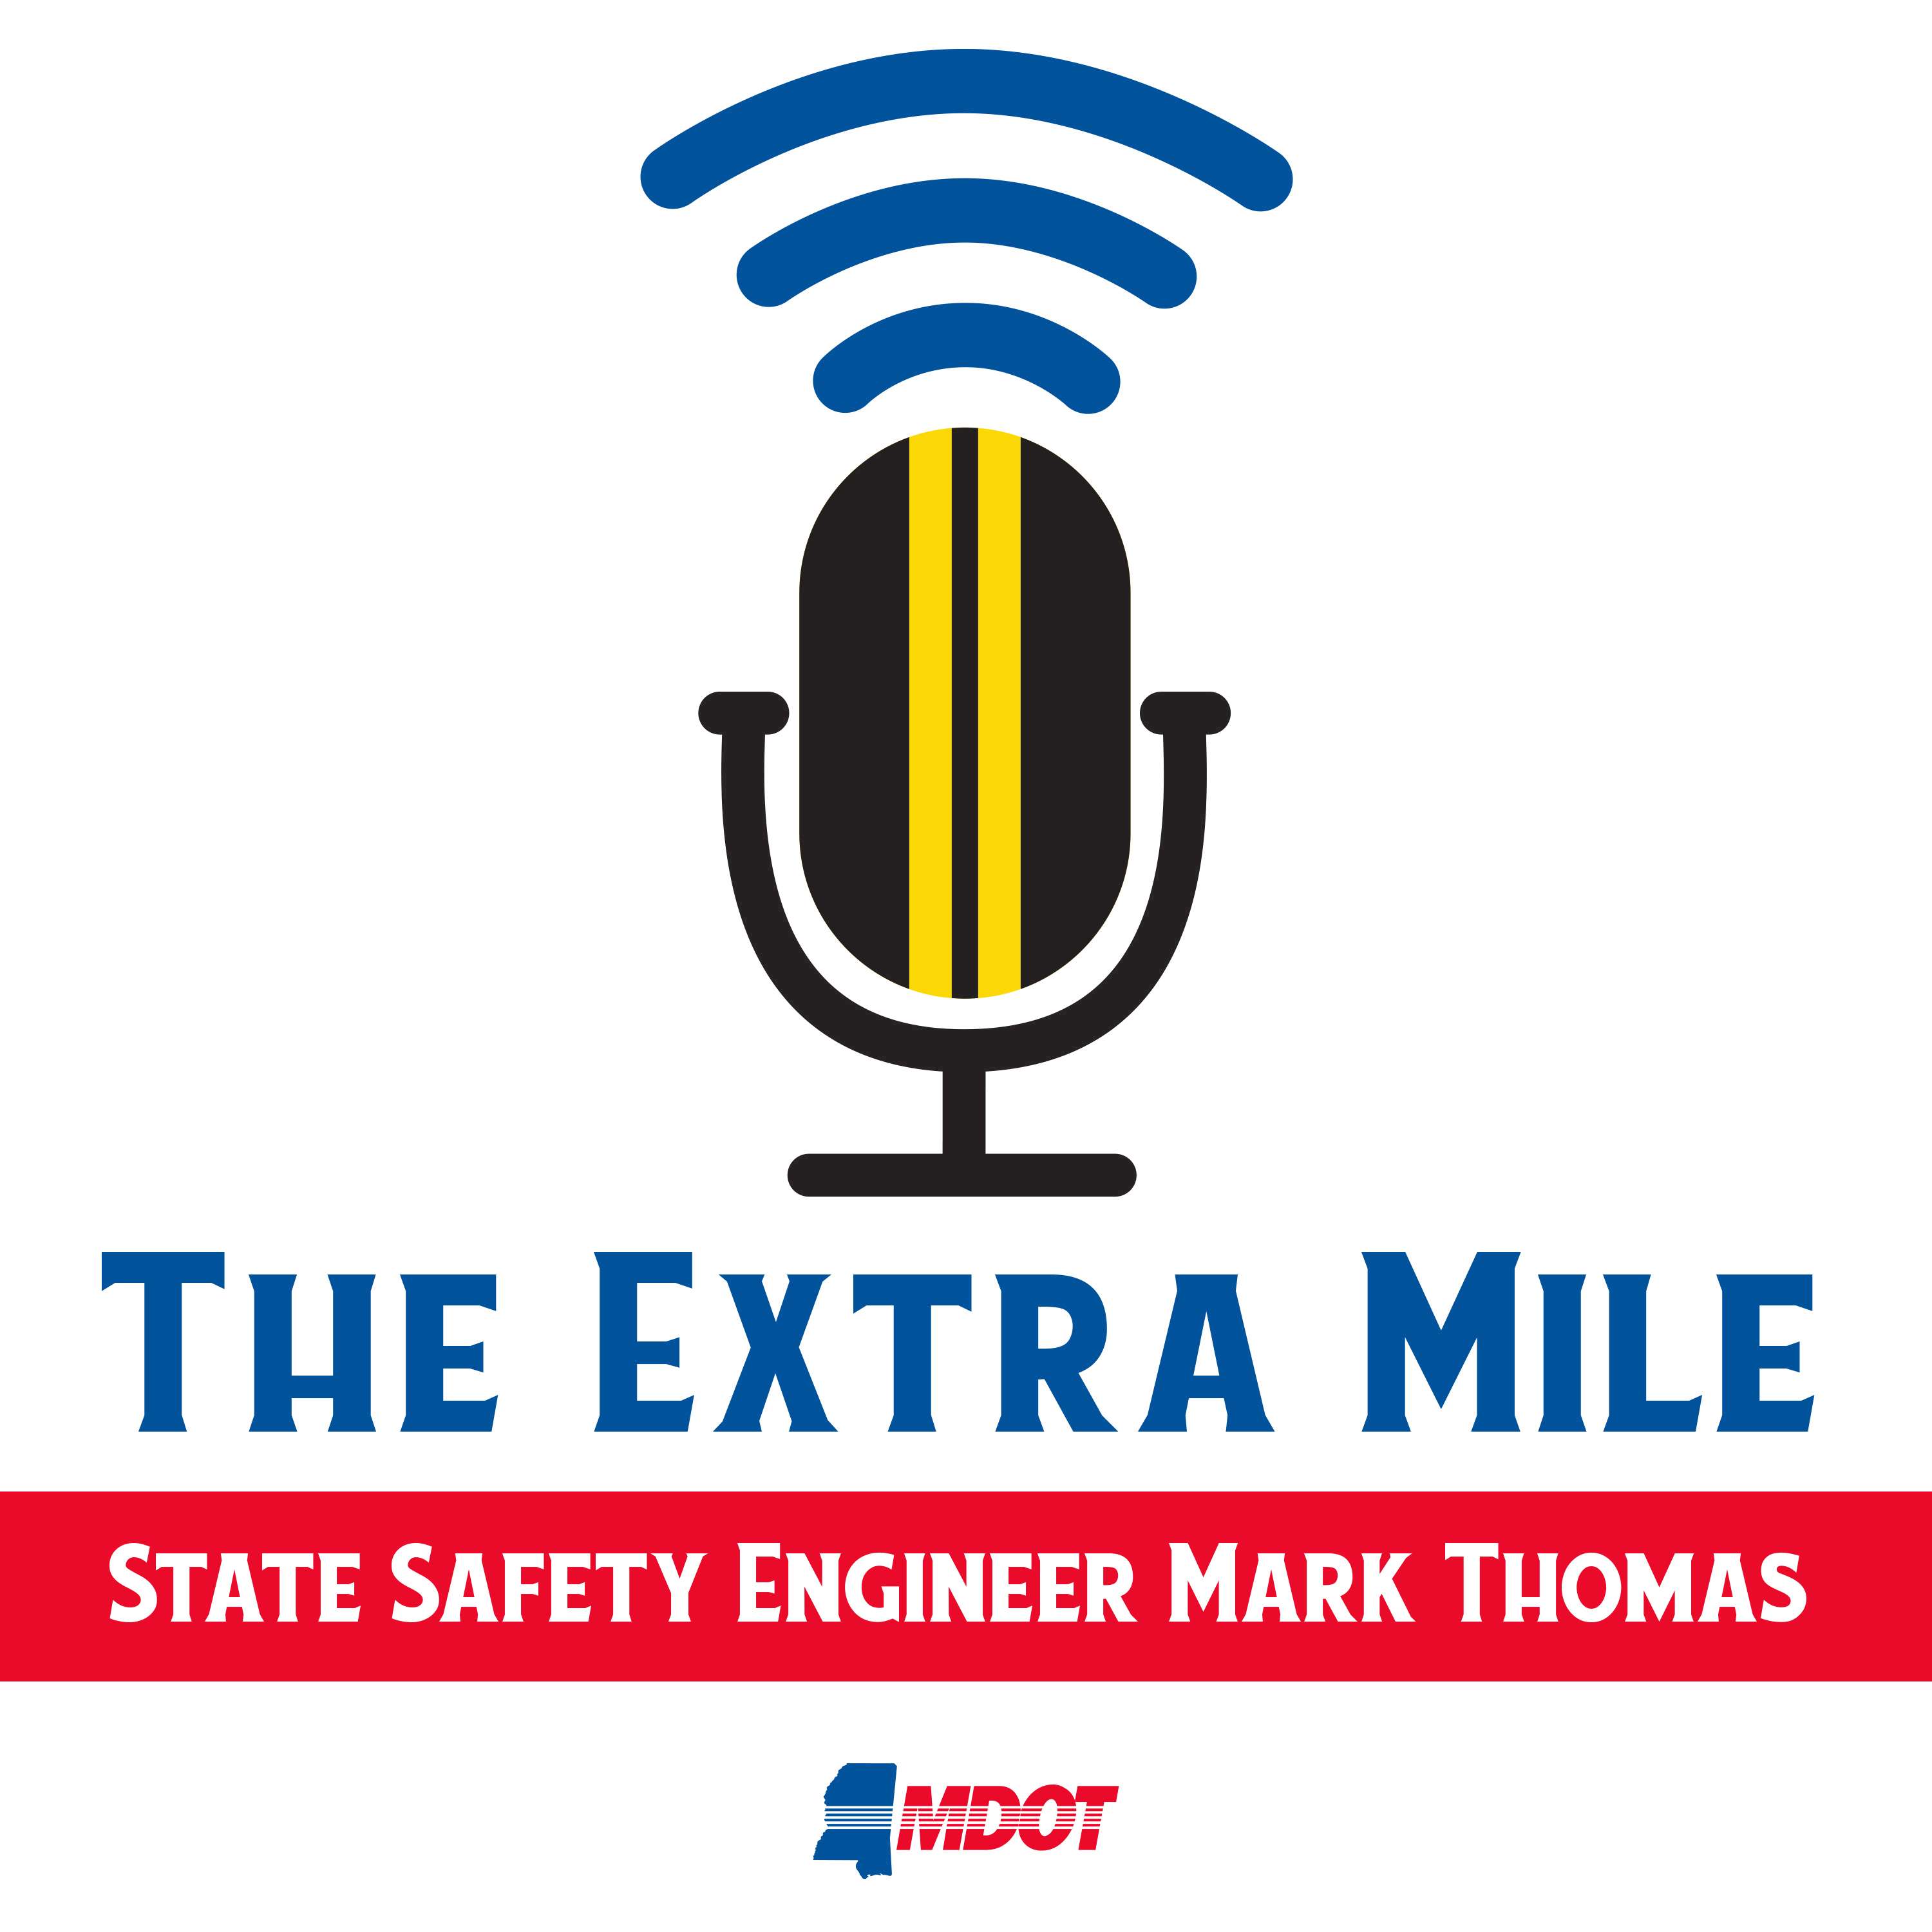 MDOT State Safety Engineer Mark Thomas